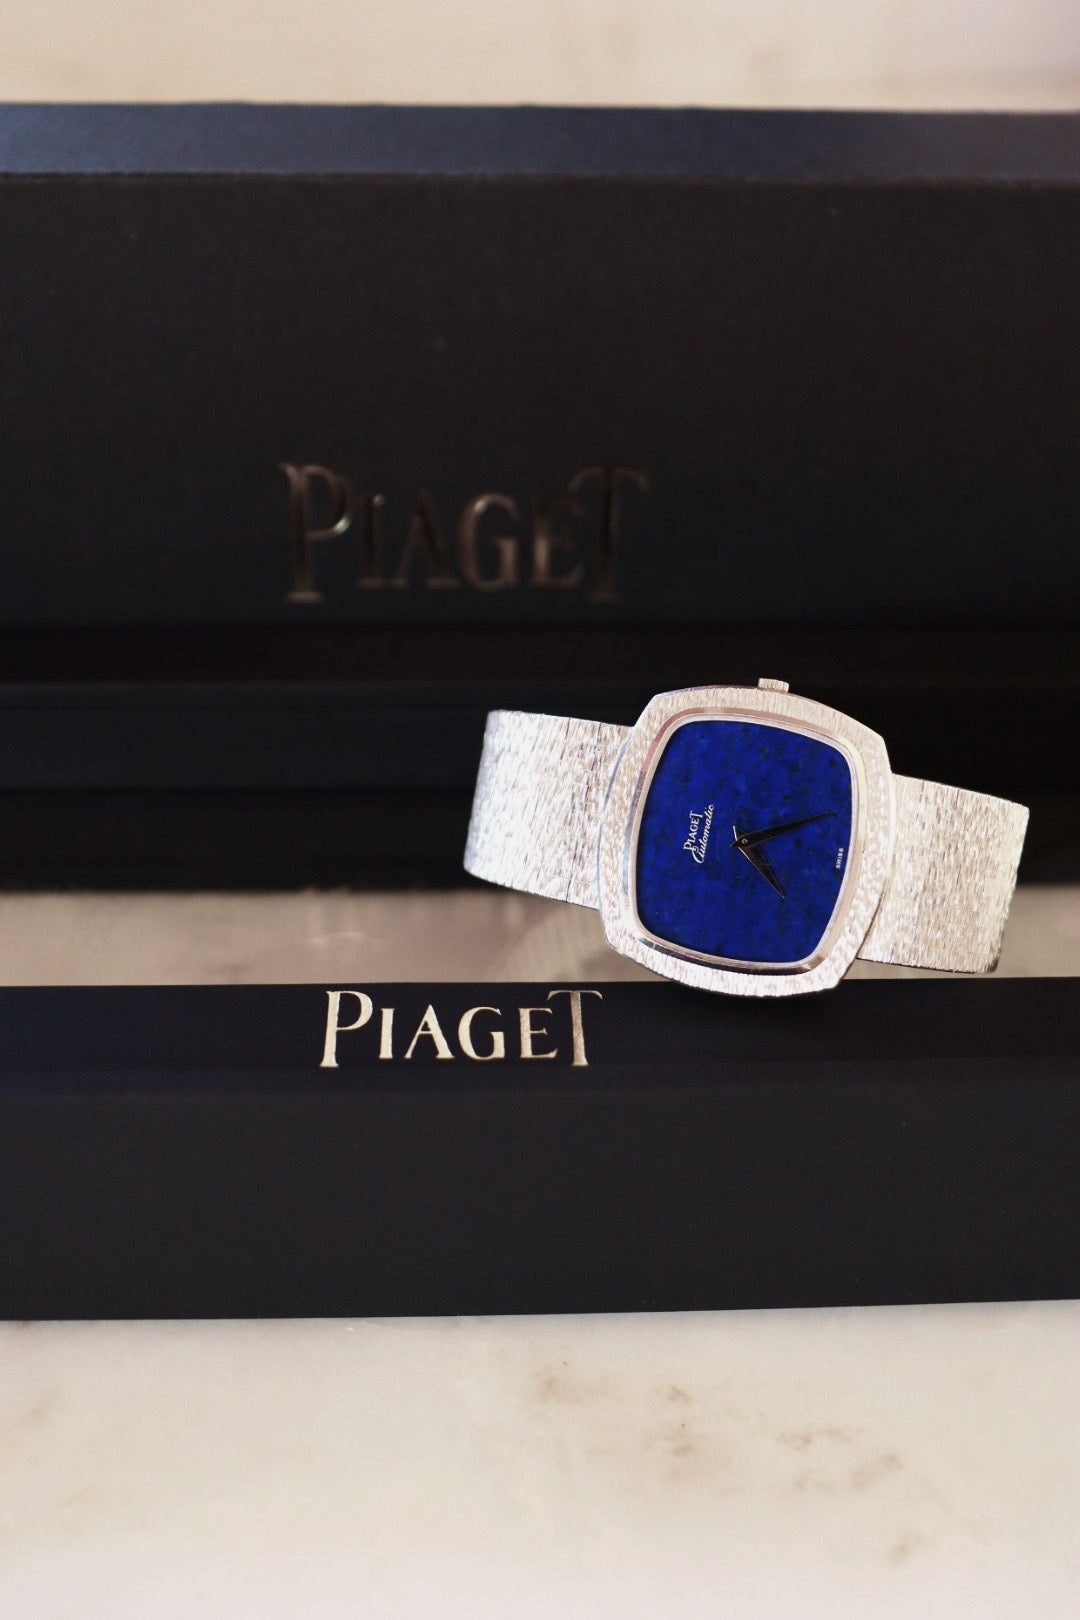 Montre Piaget 12431 A6 en or blanc, cadran bleu lapis lazuli vintage